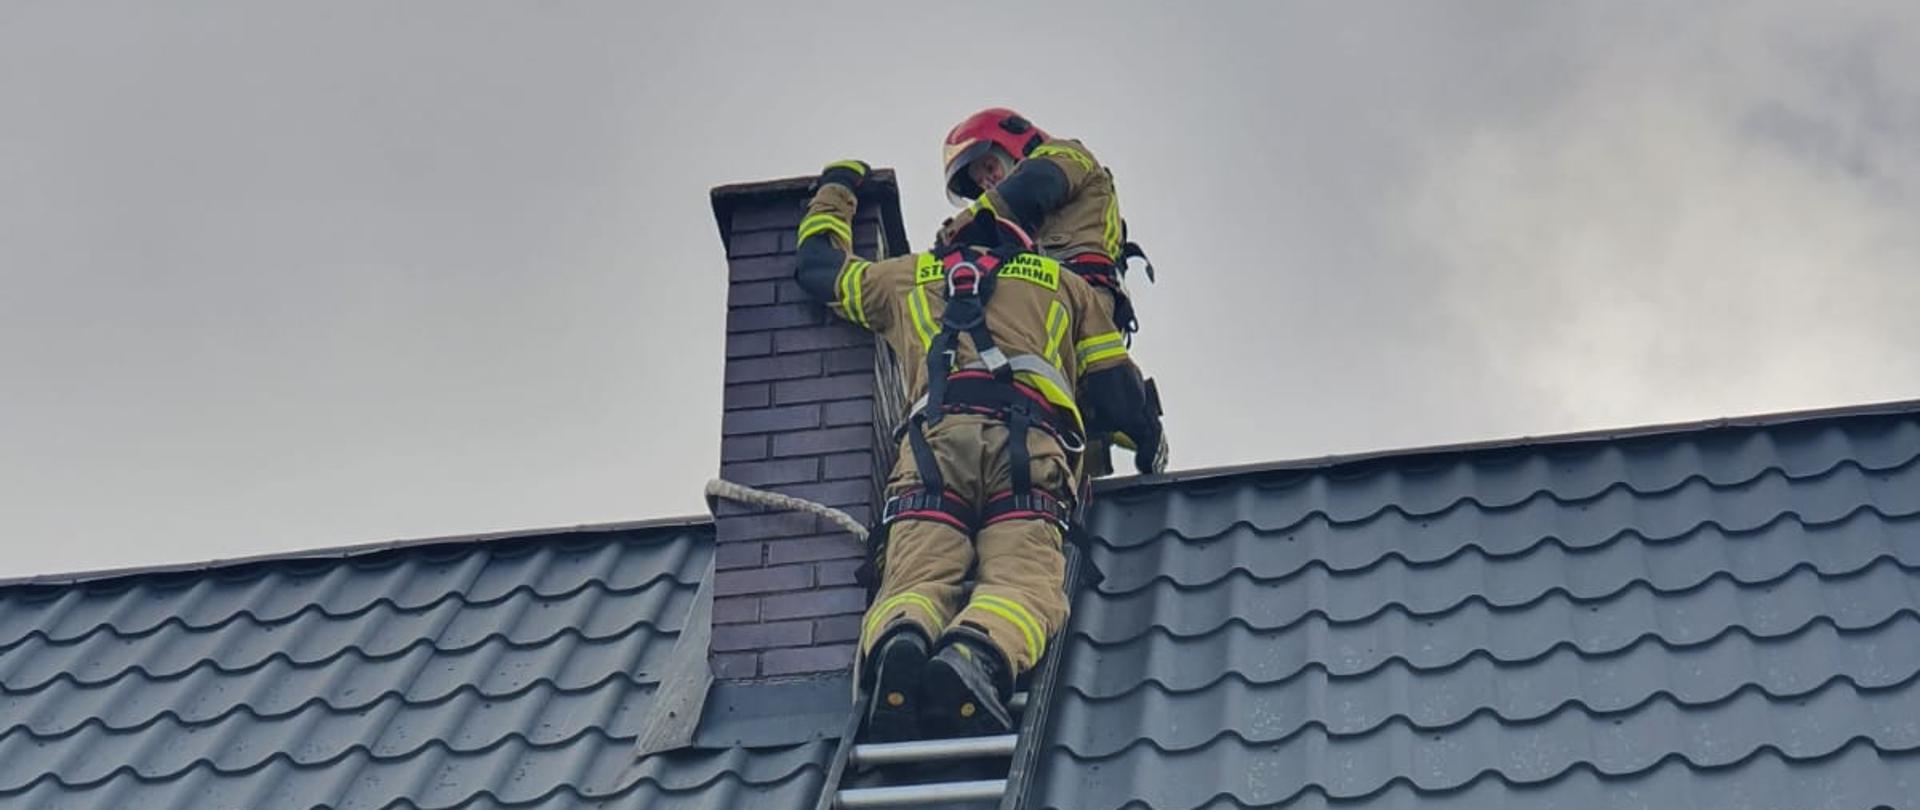 Strażacy na drabinę na dachu obok komina